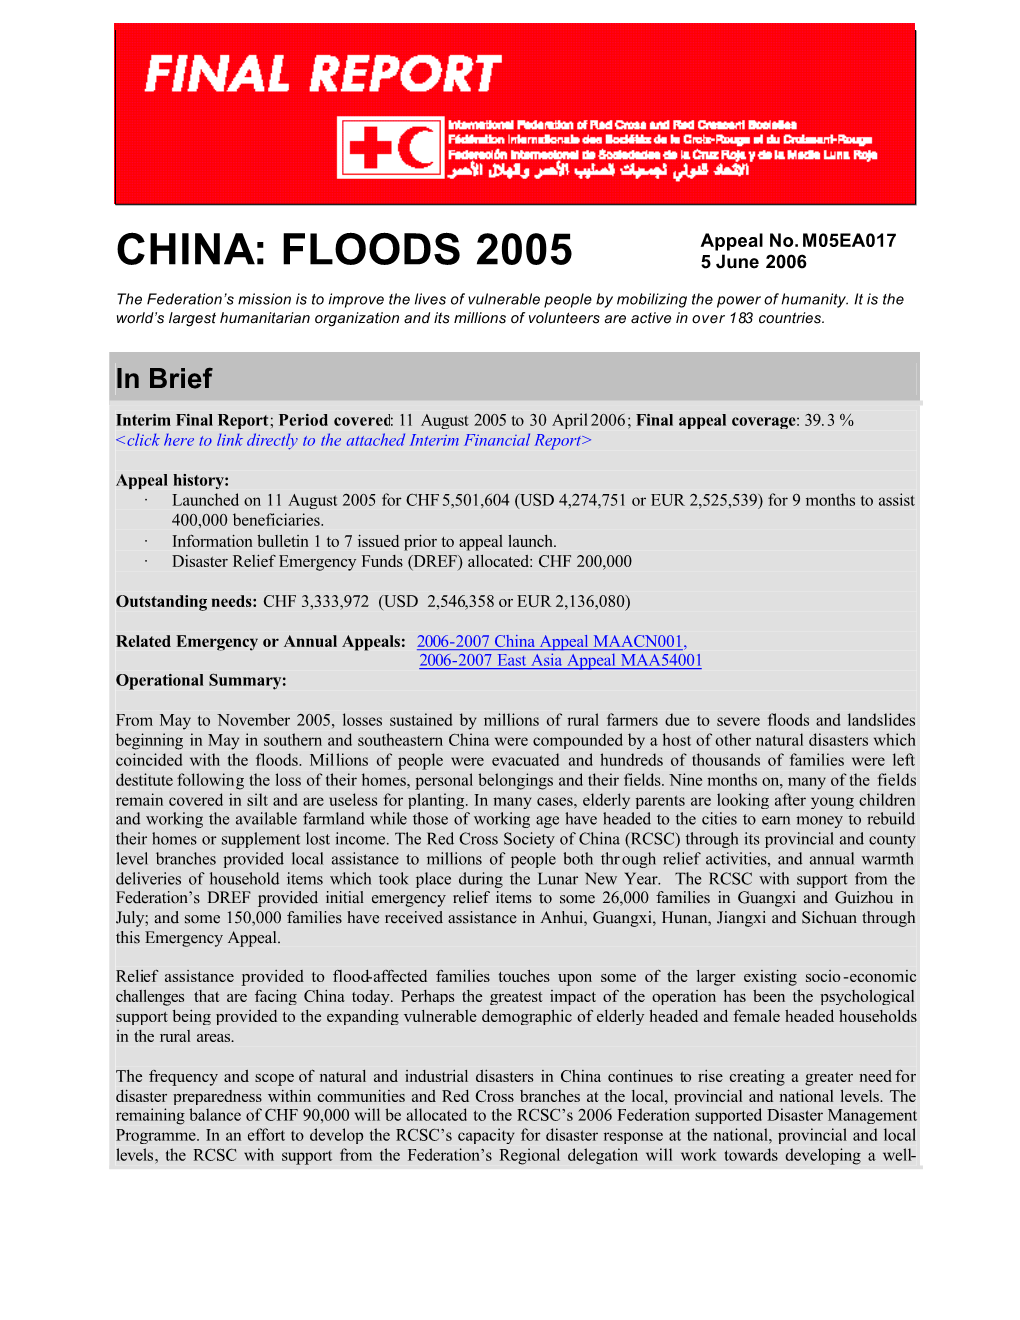 CHINA: FLOODS 2005 5 June 2006